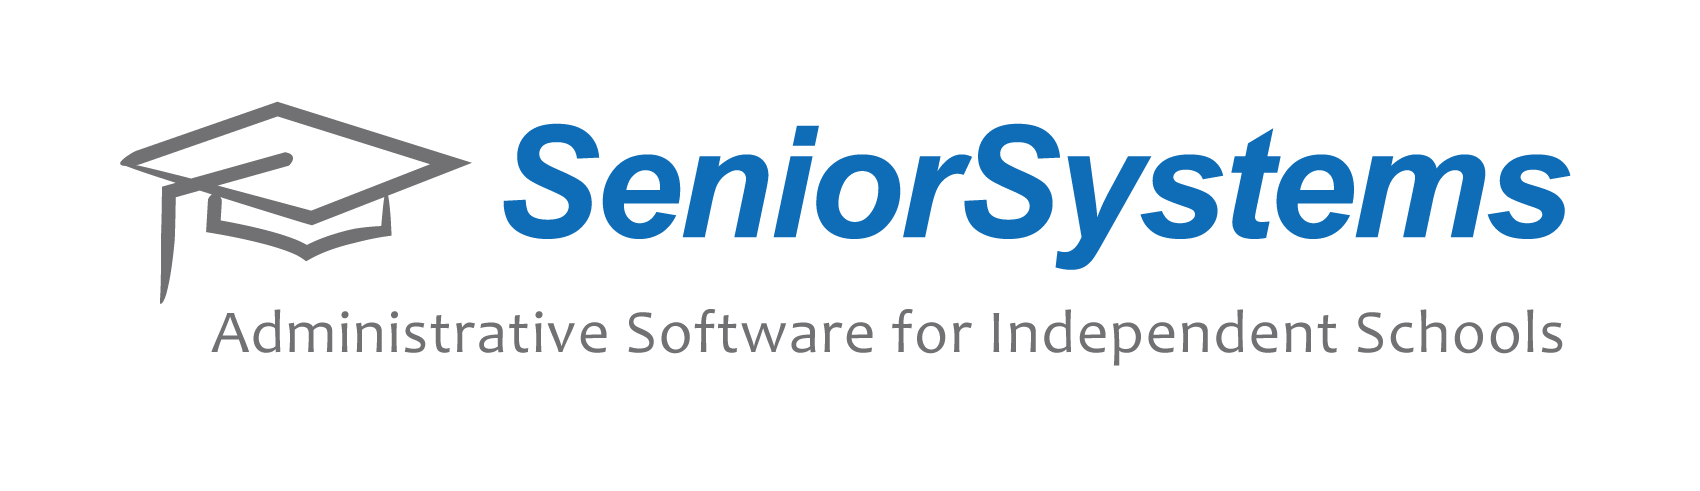 SeniorSystems_logo_web